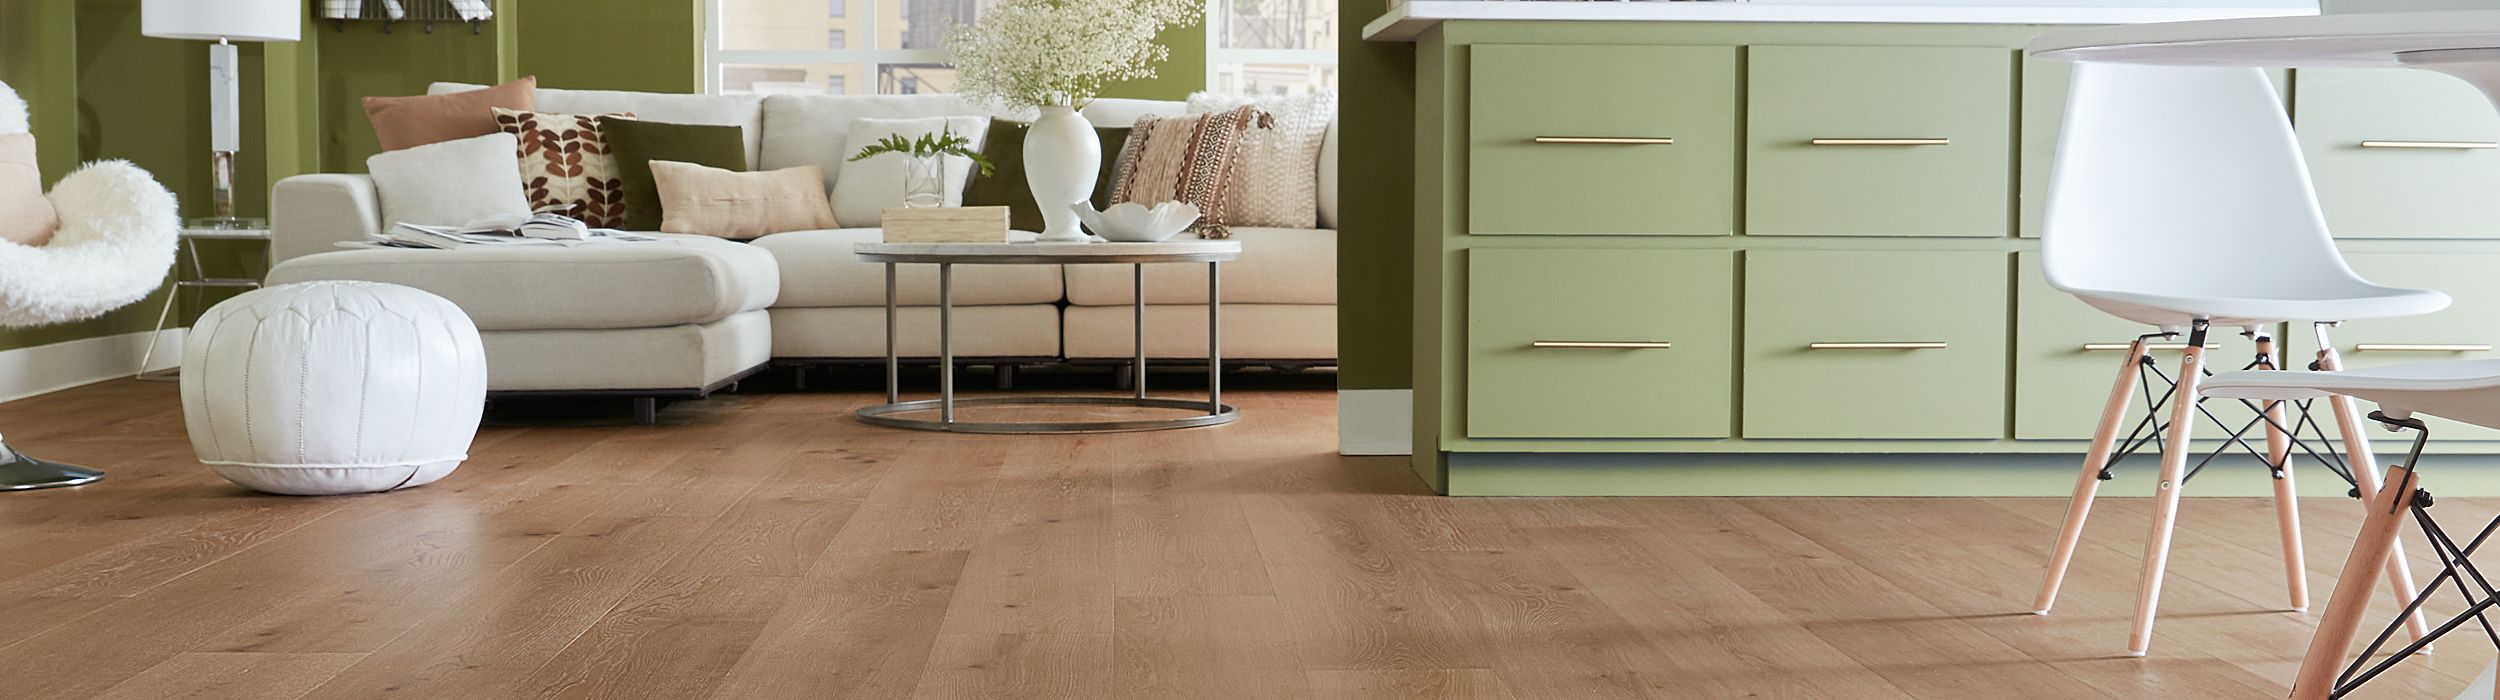 natural hardwood floors in green and white modern living room